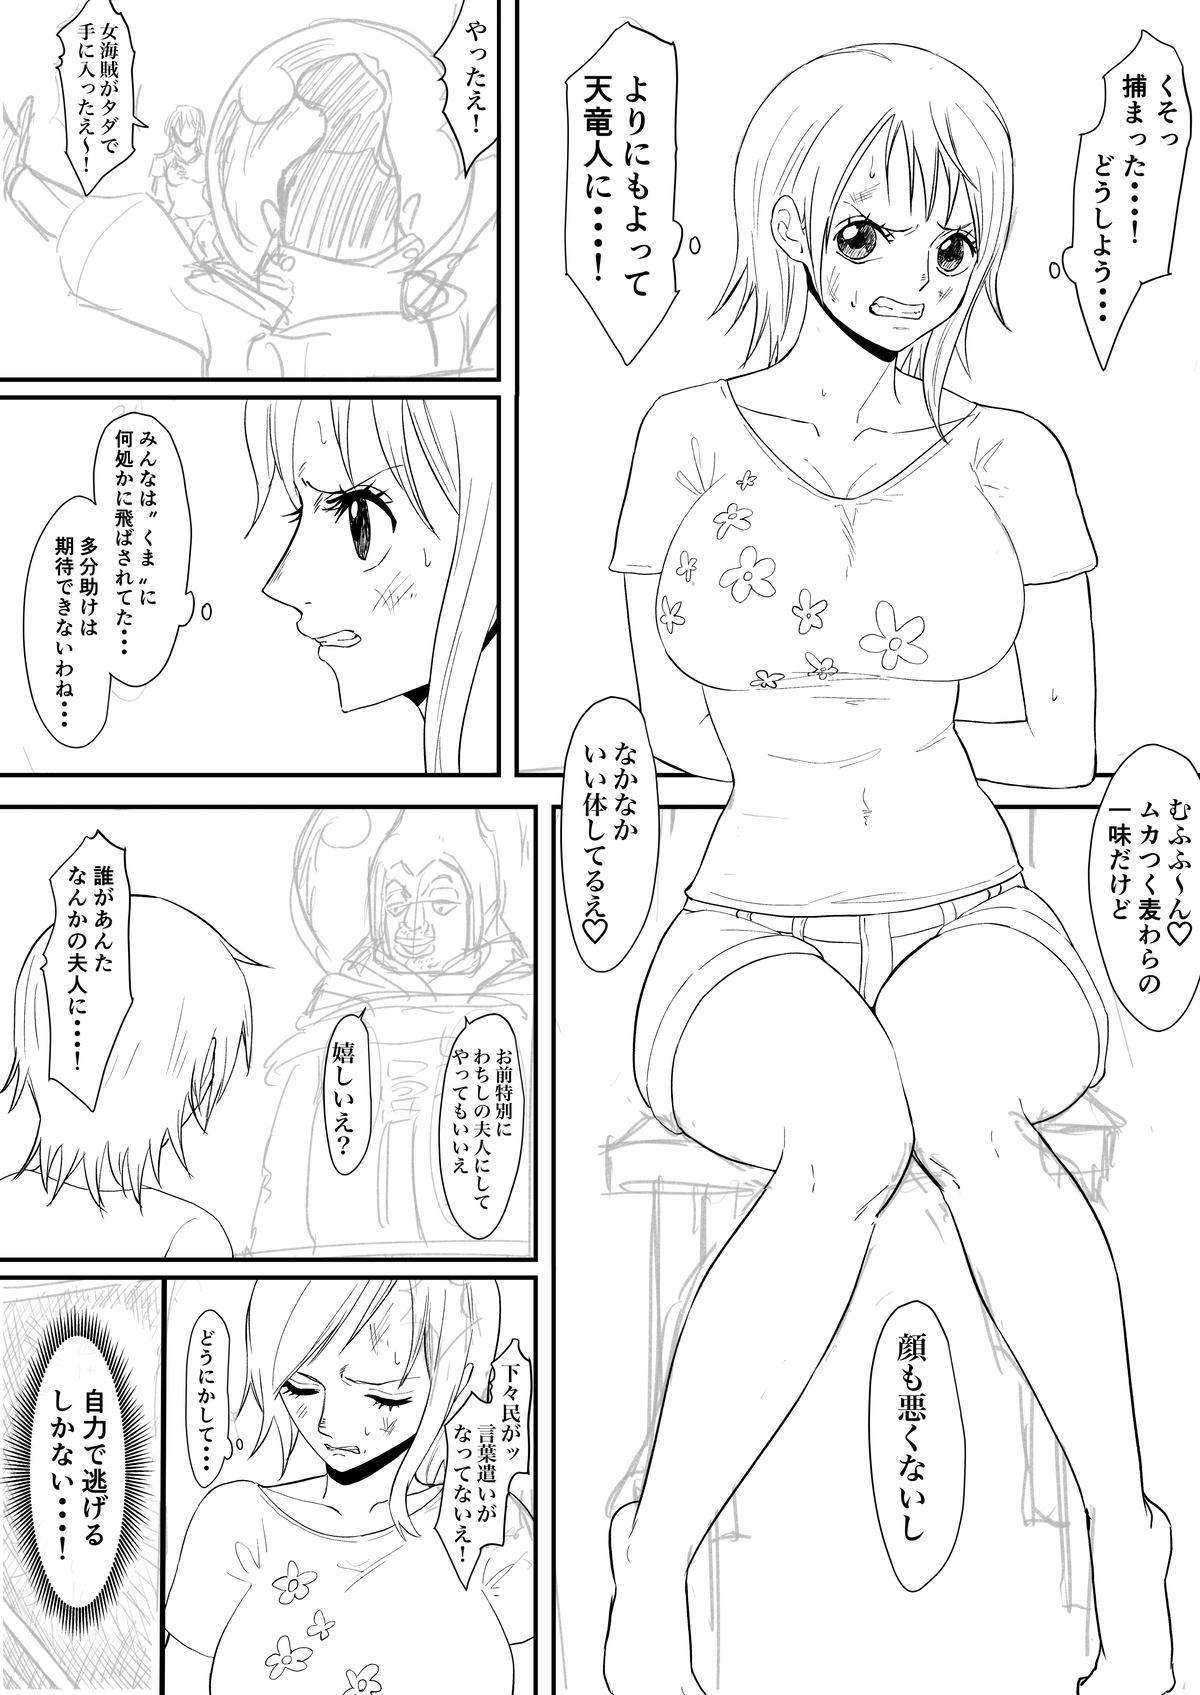 Nude Nami Manga + various bonus - One piece Bang - Page 3